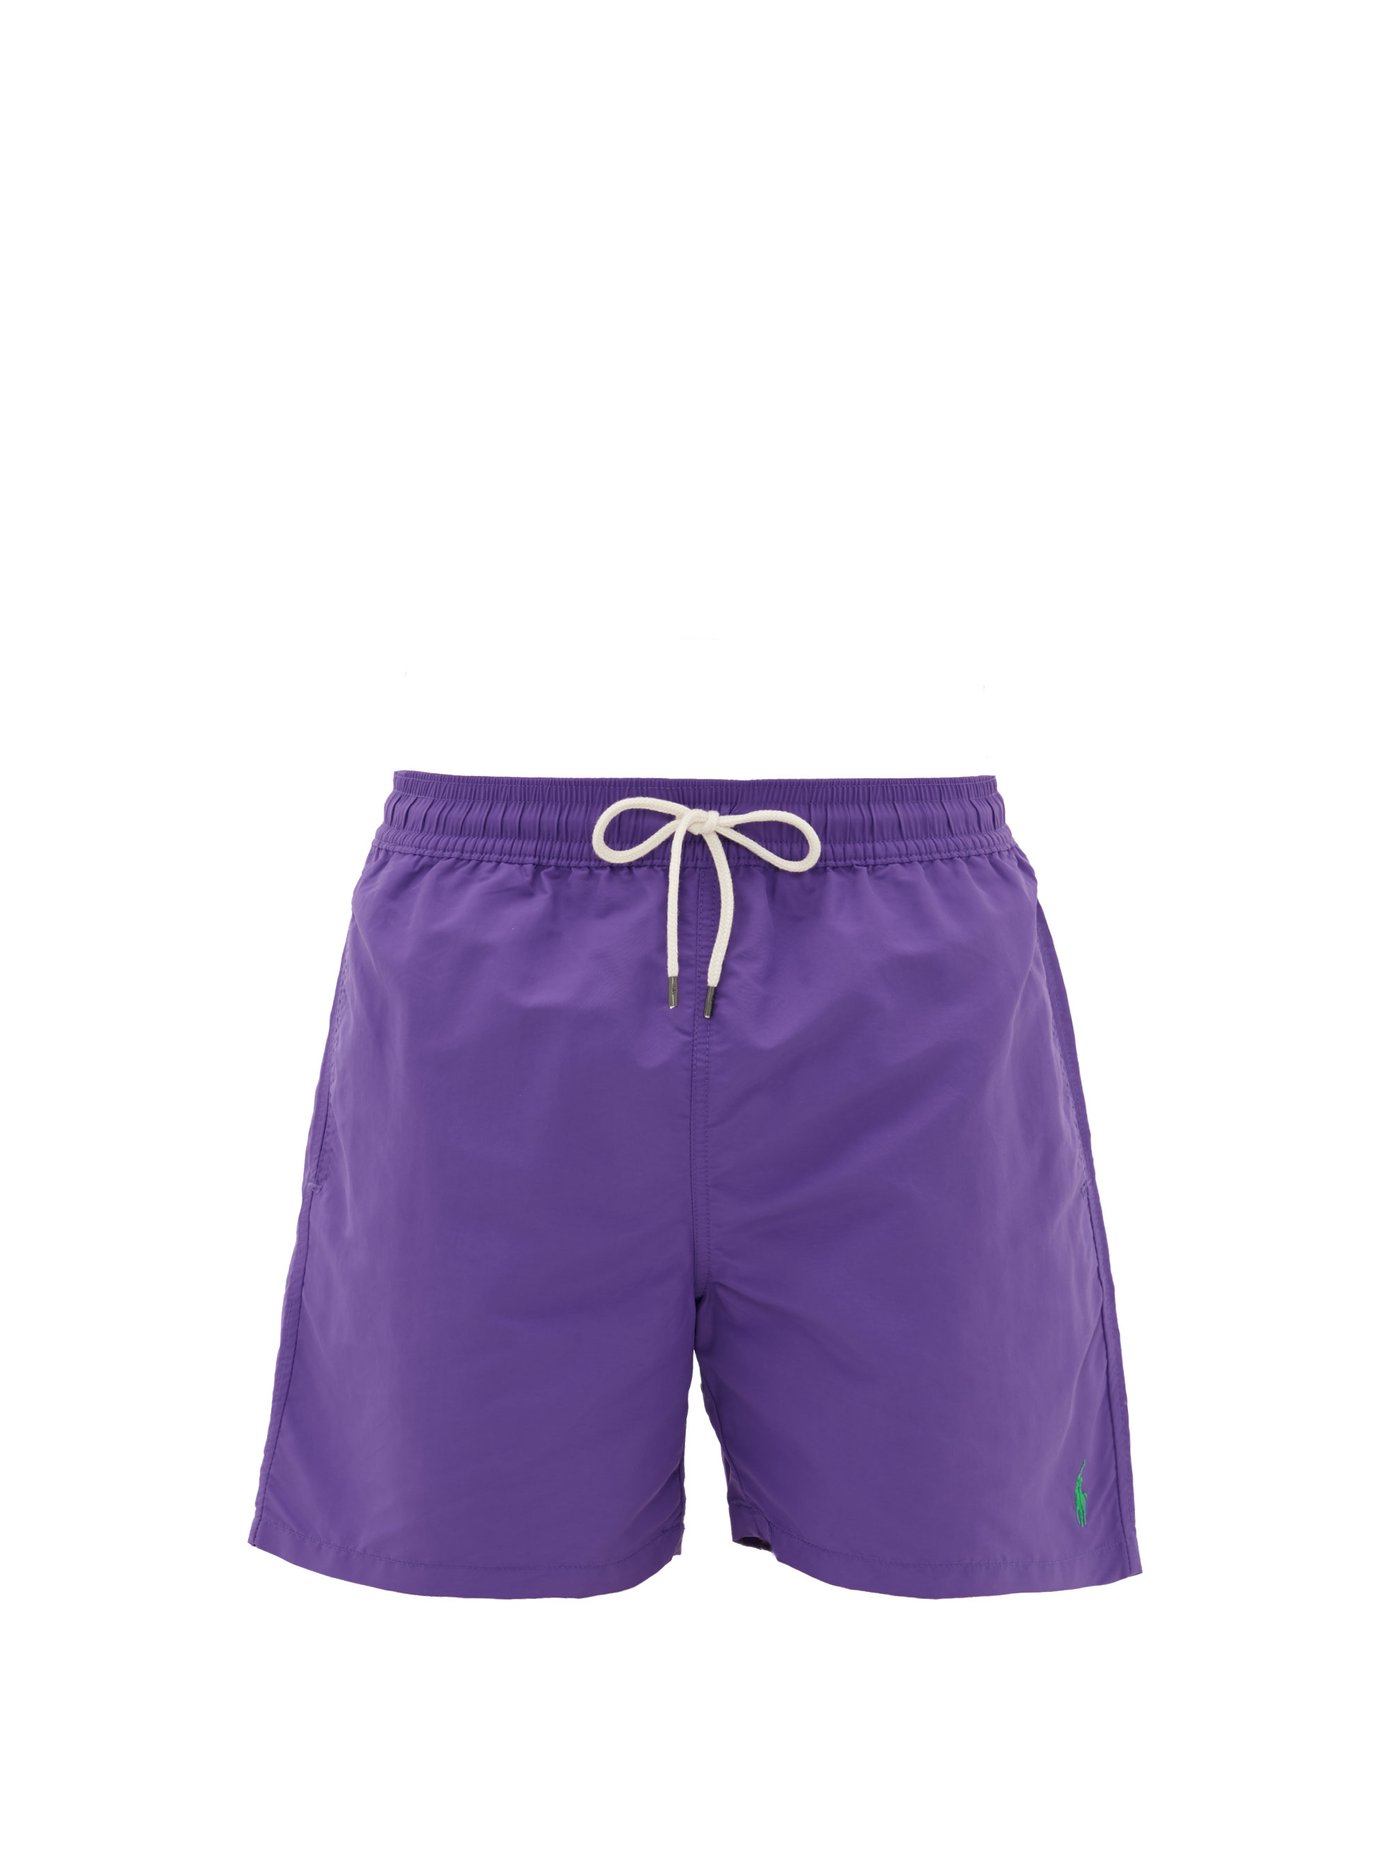 ralph lauren swim shorts uk